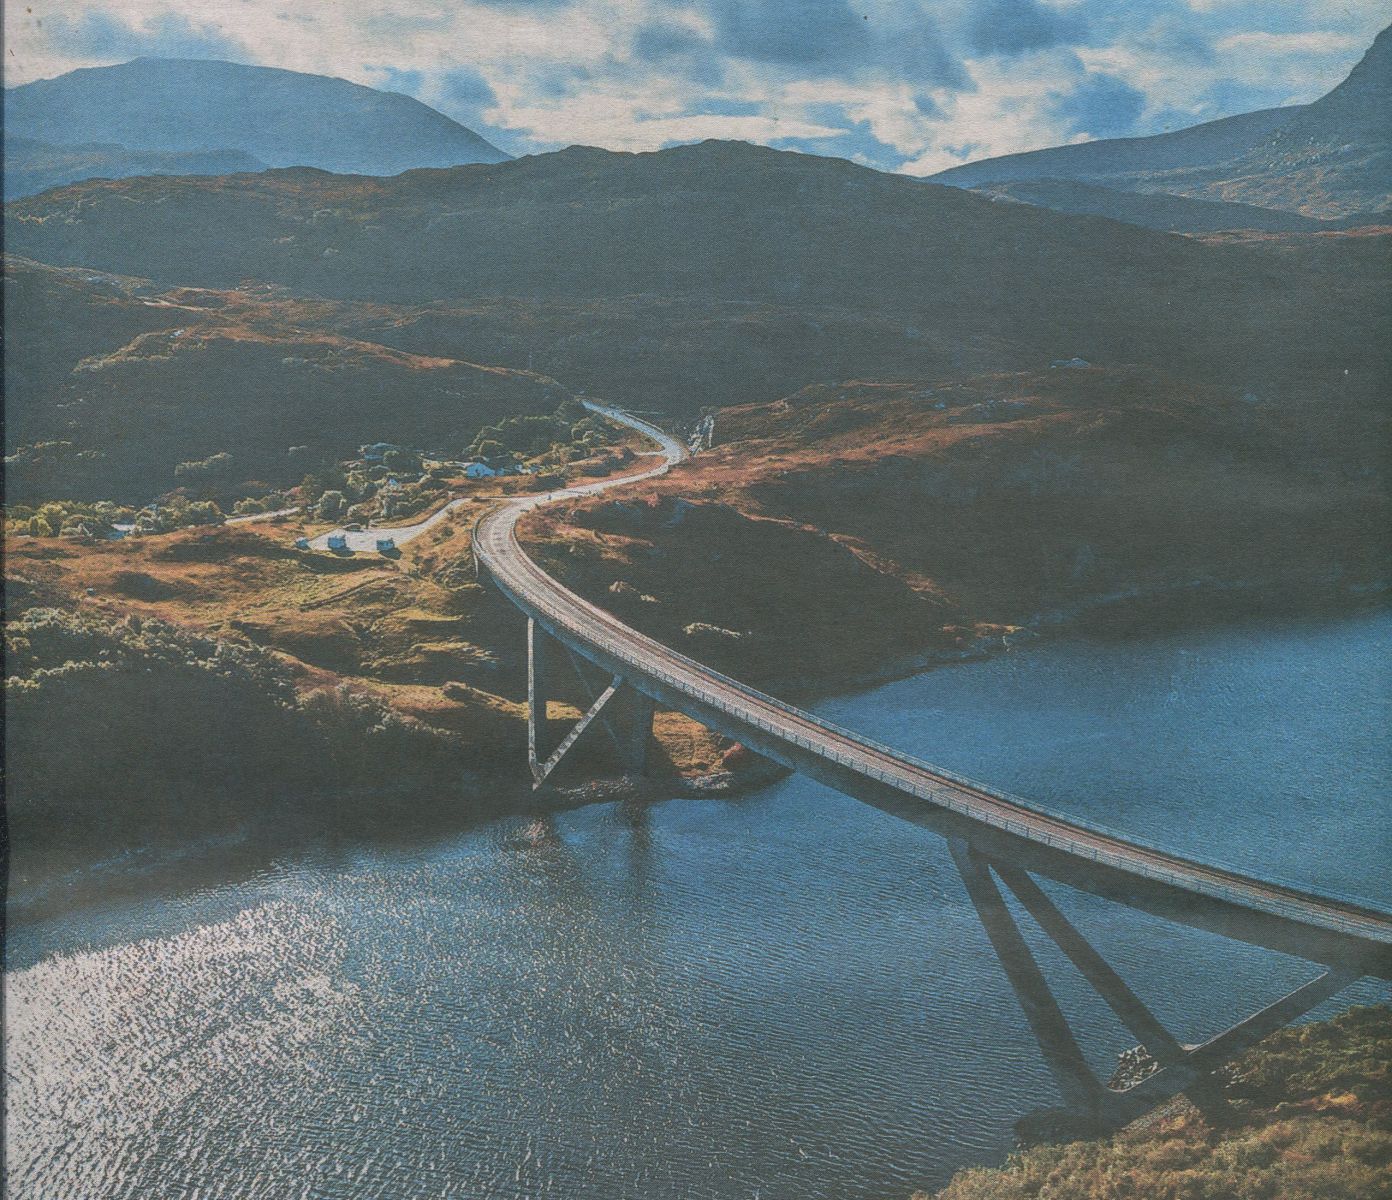 Bridge at Kylesku in NW Scotland